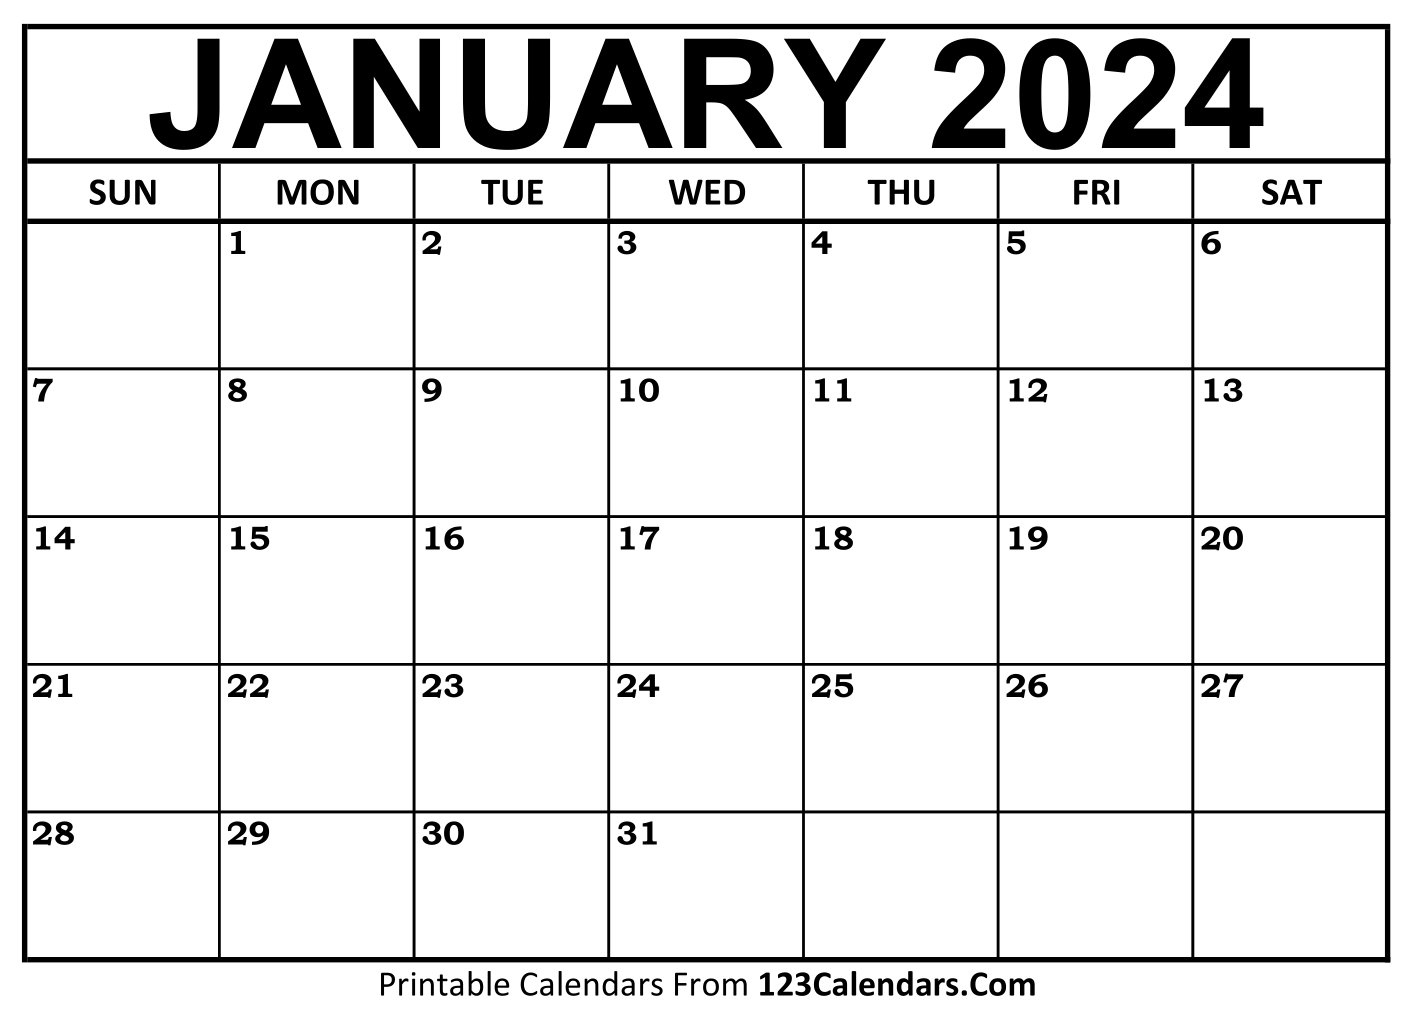 Printable January 2024 Calendar Templates - 123Calendars | Free 2024 Printable Calendar By Month